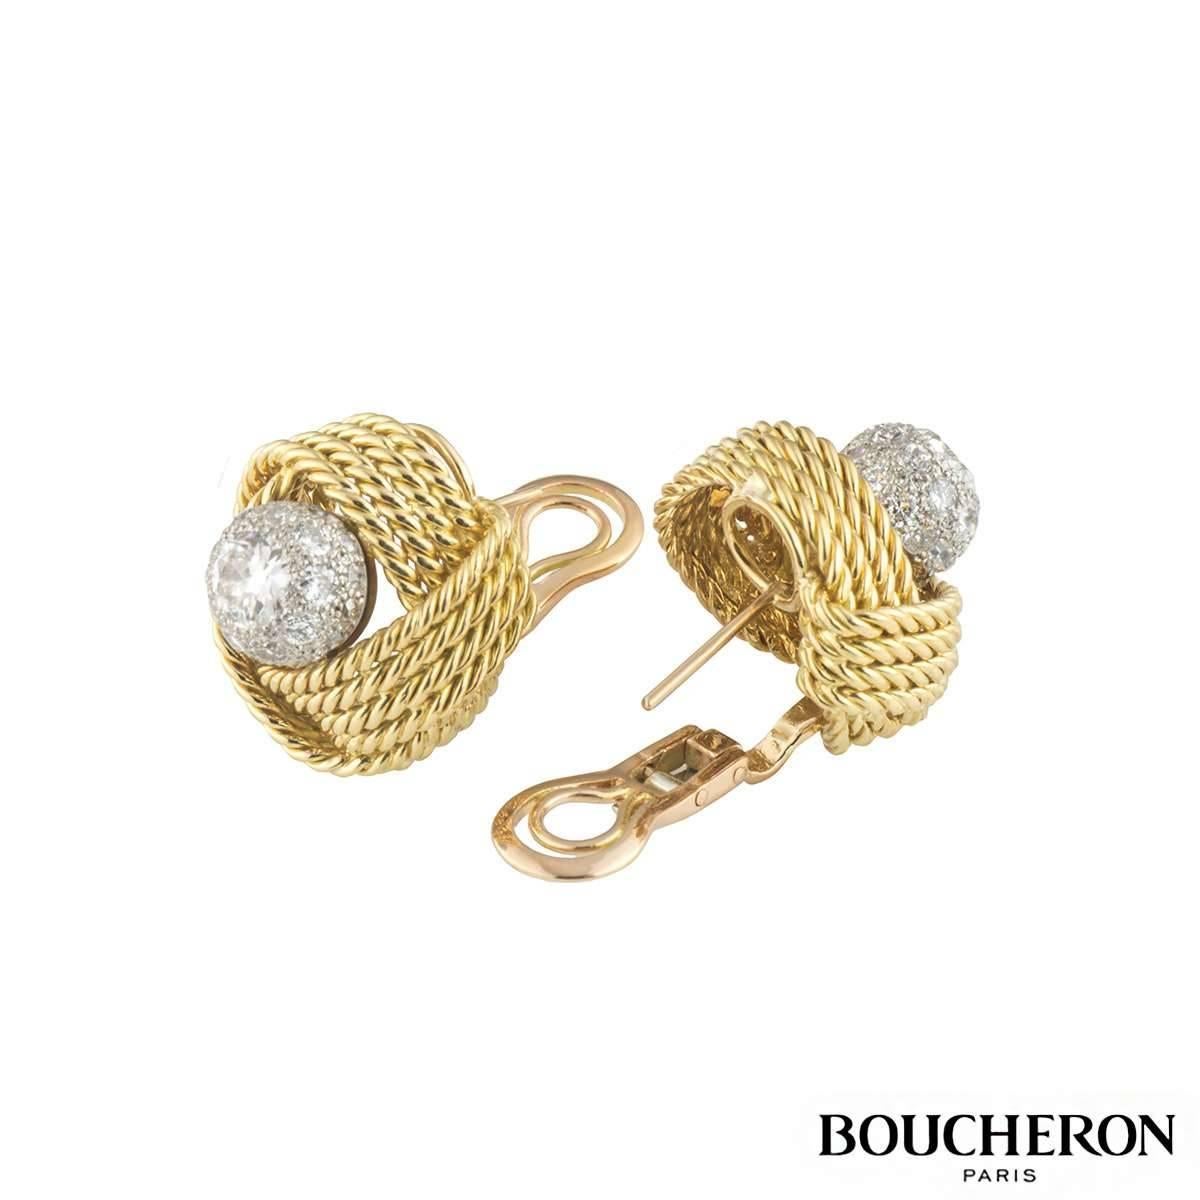 Round Cut Vintage Boucheron Diamond Knot Earrings 3.00 carats